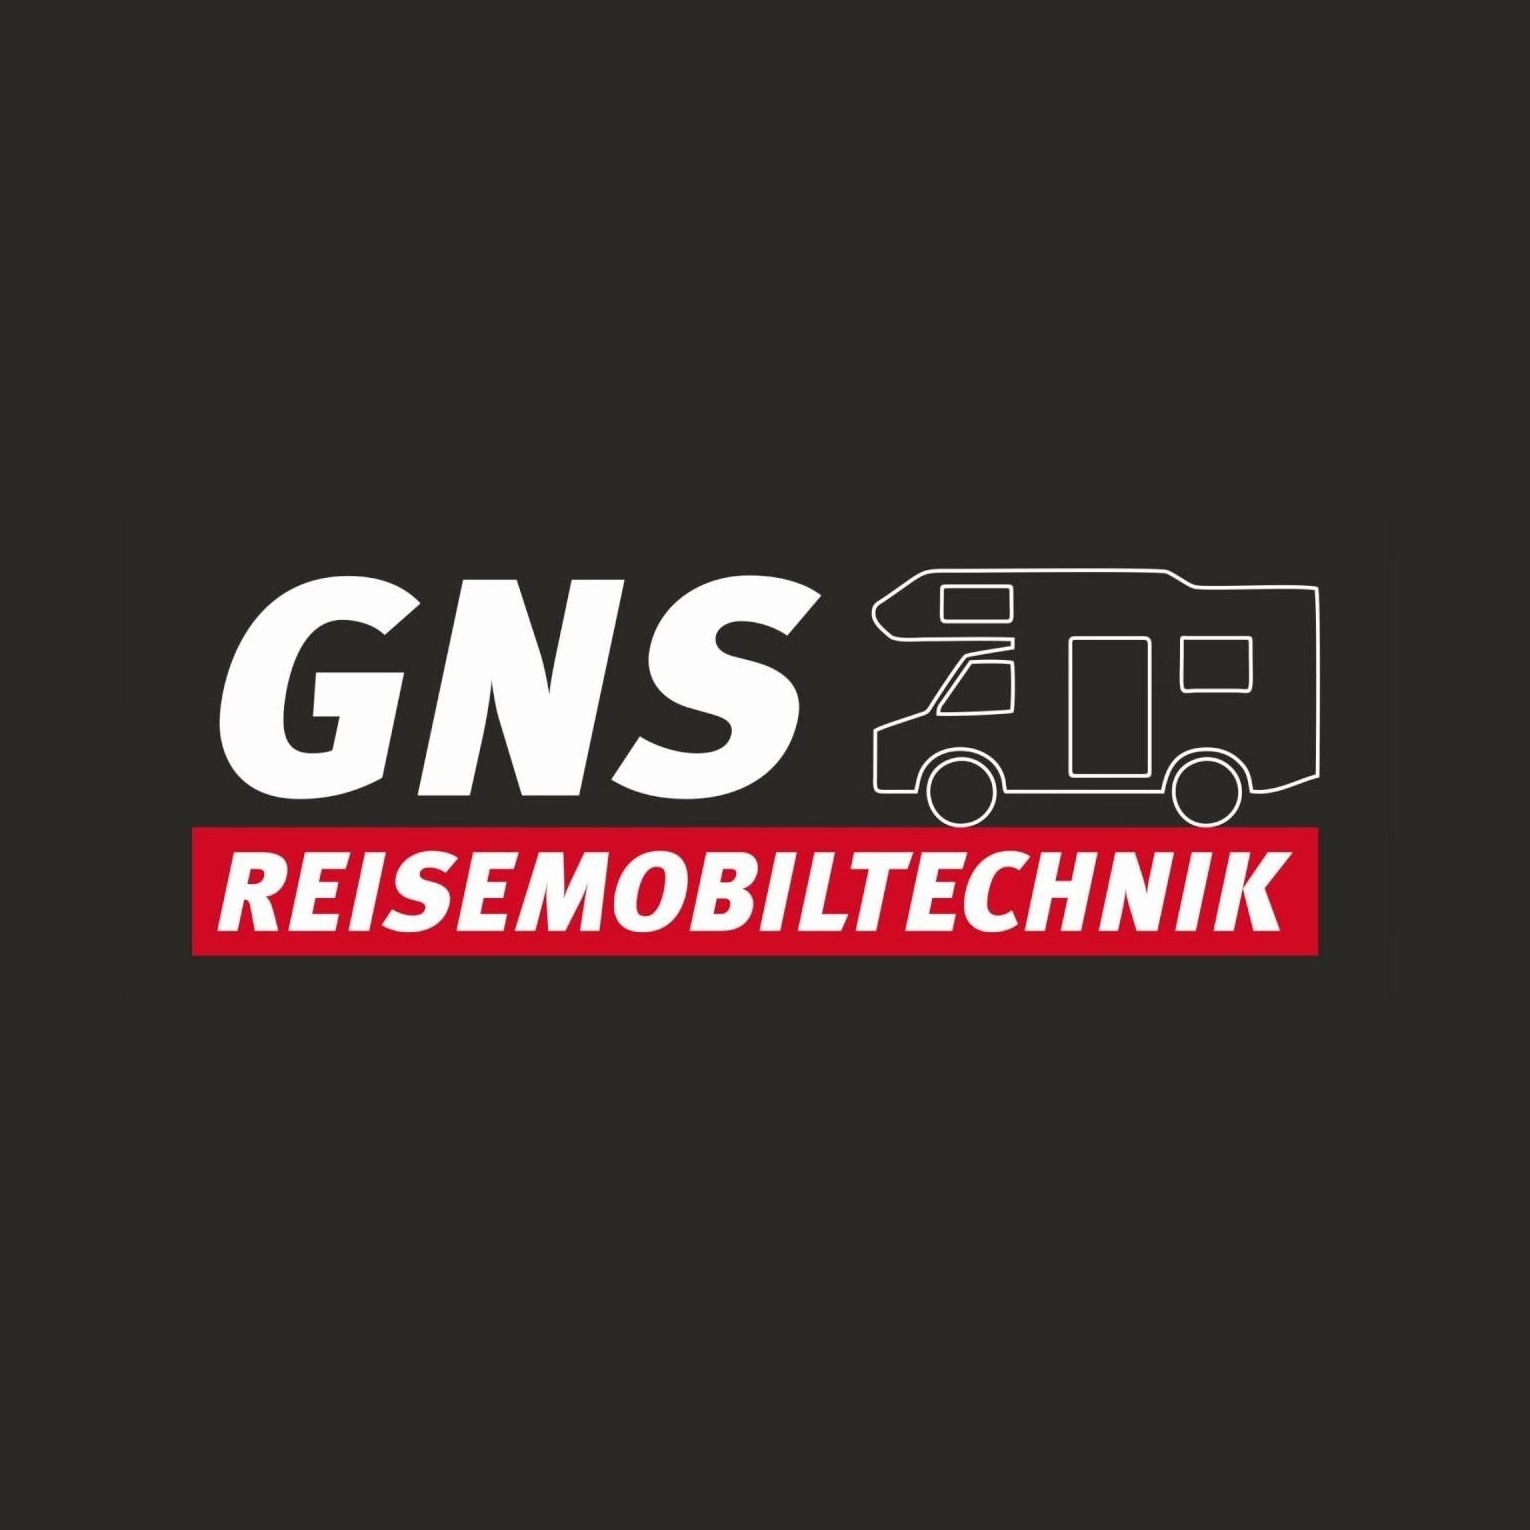 GNS Reisemobiltechnik in Mönchengladbach - Logo